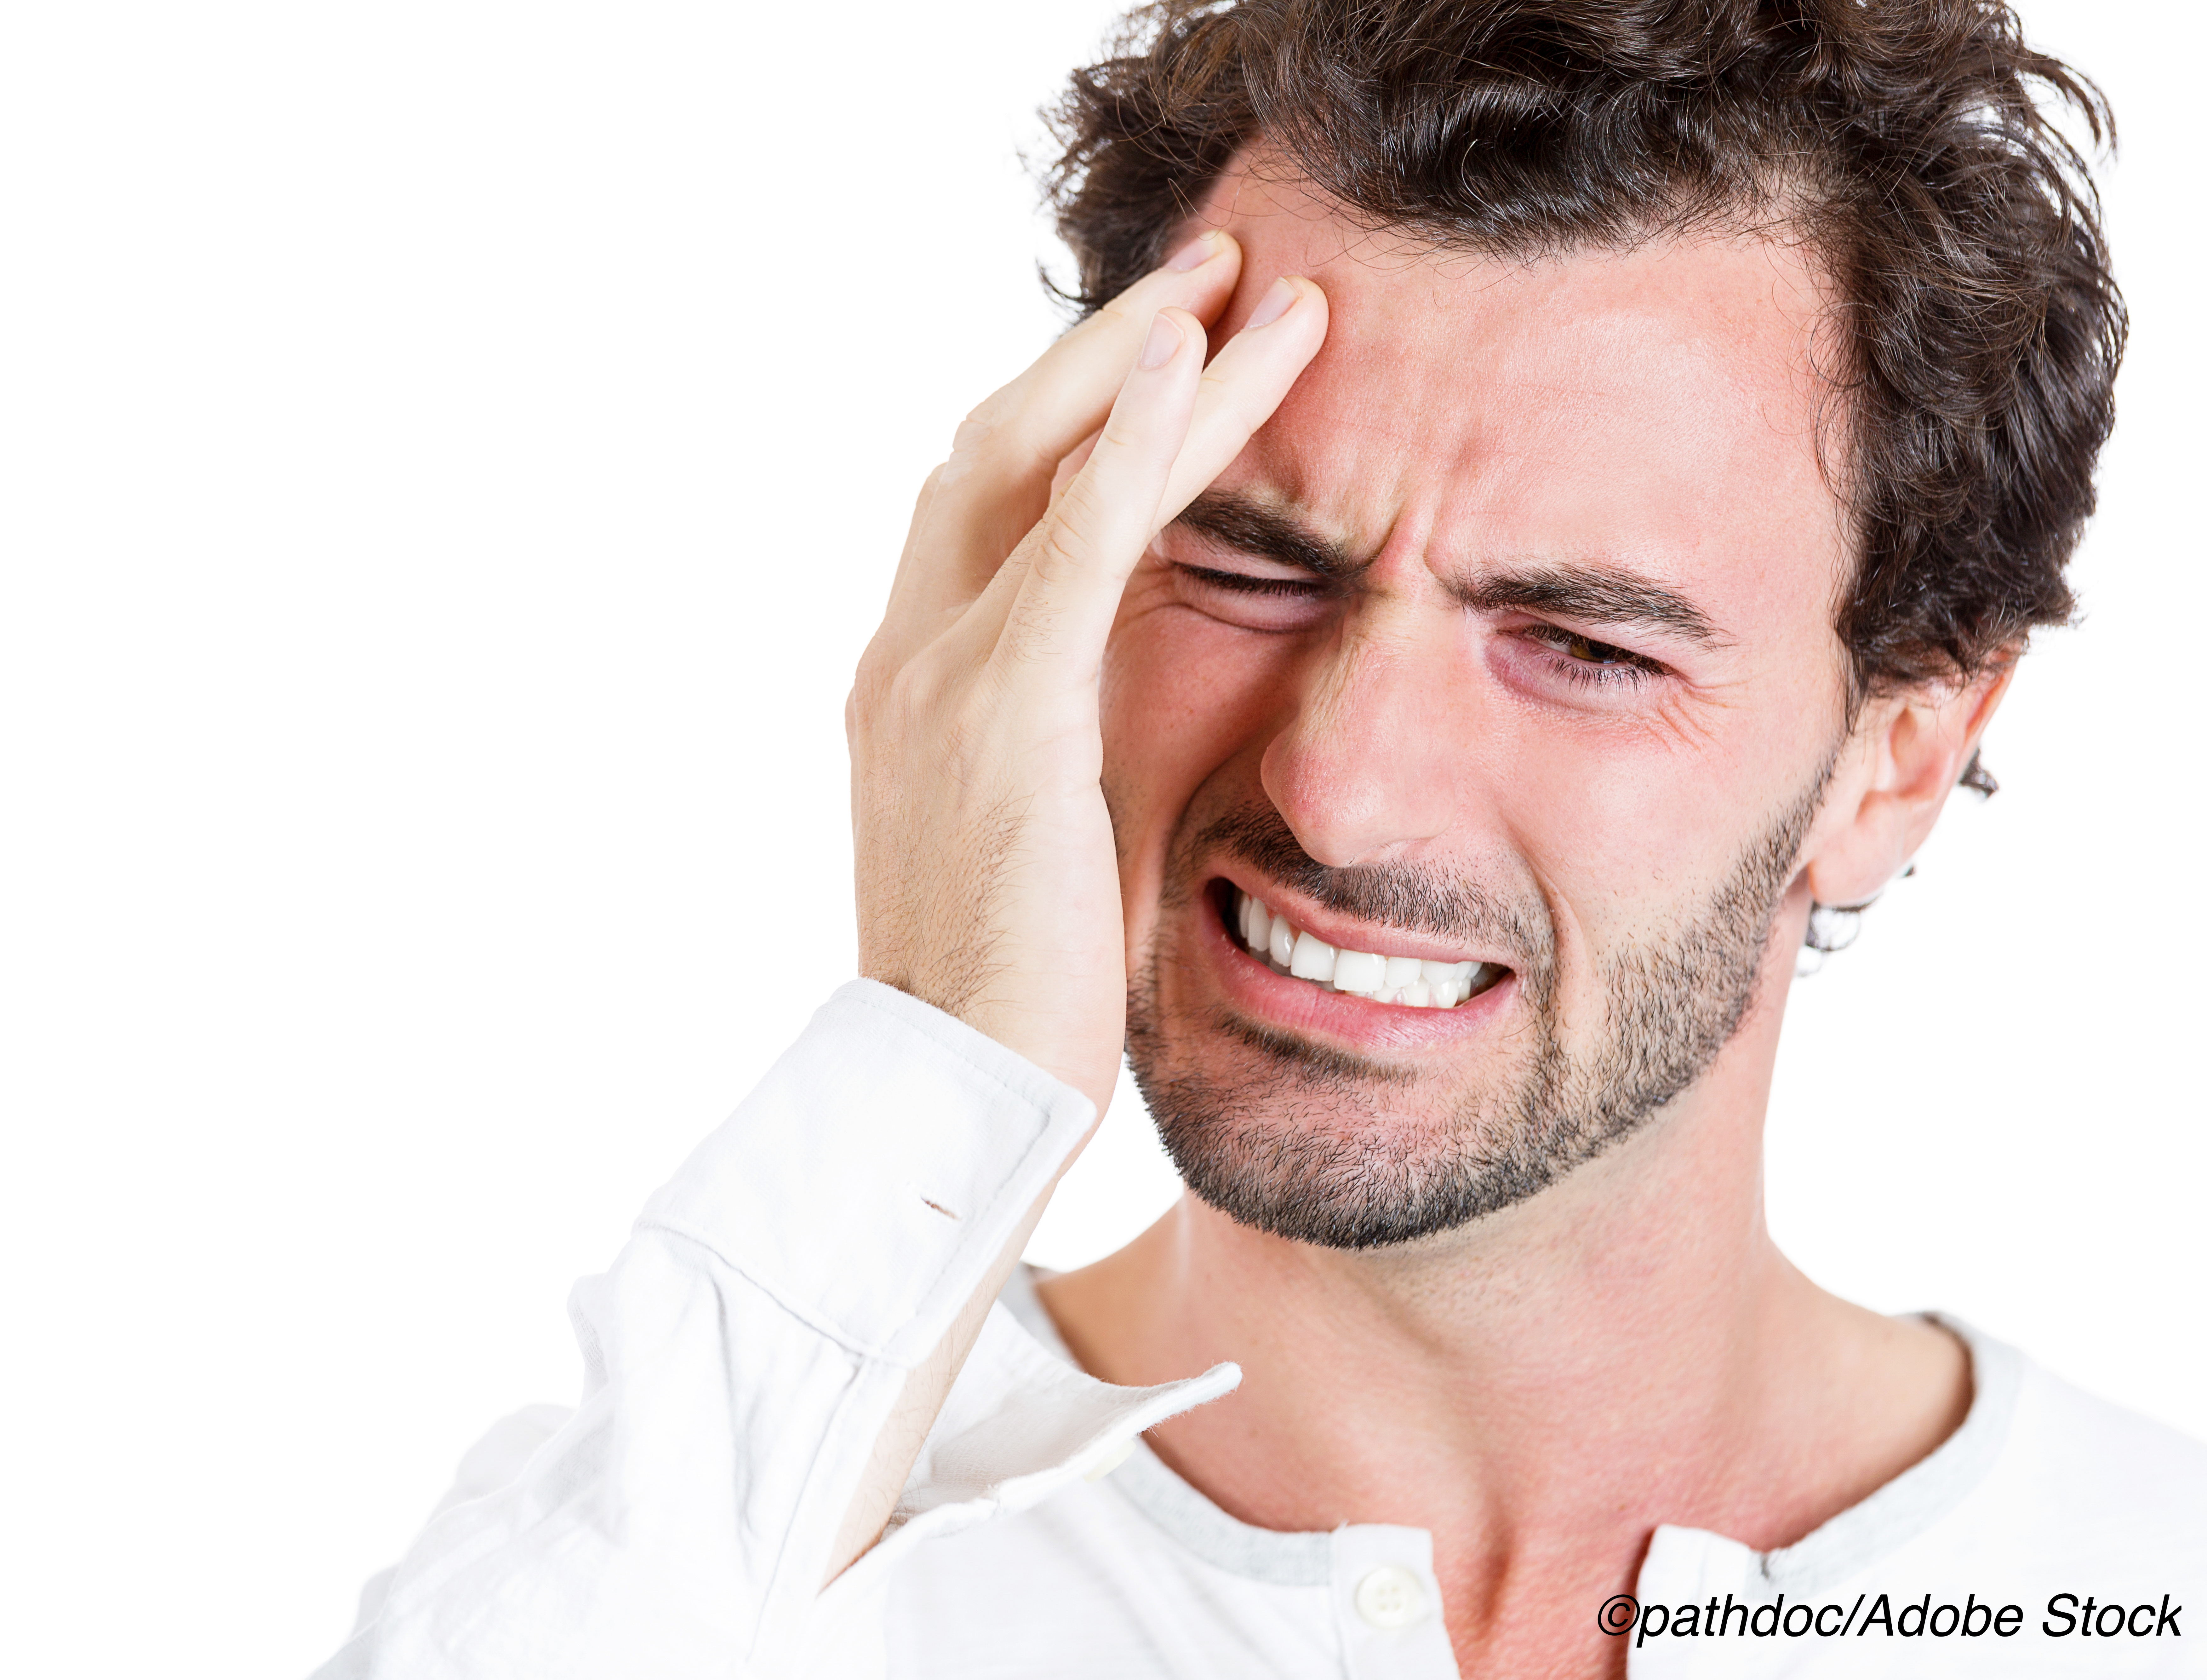 Occipital Nerve Stimulation Improves Refractory Chronic Cluster Headache